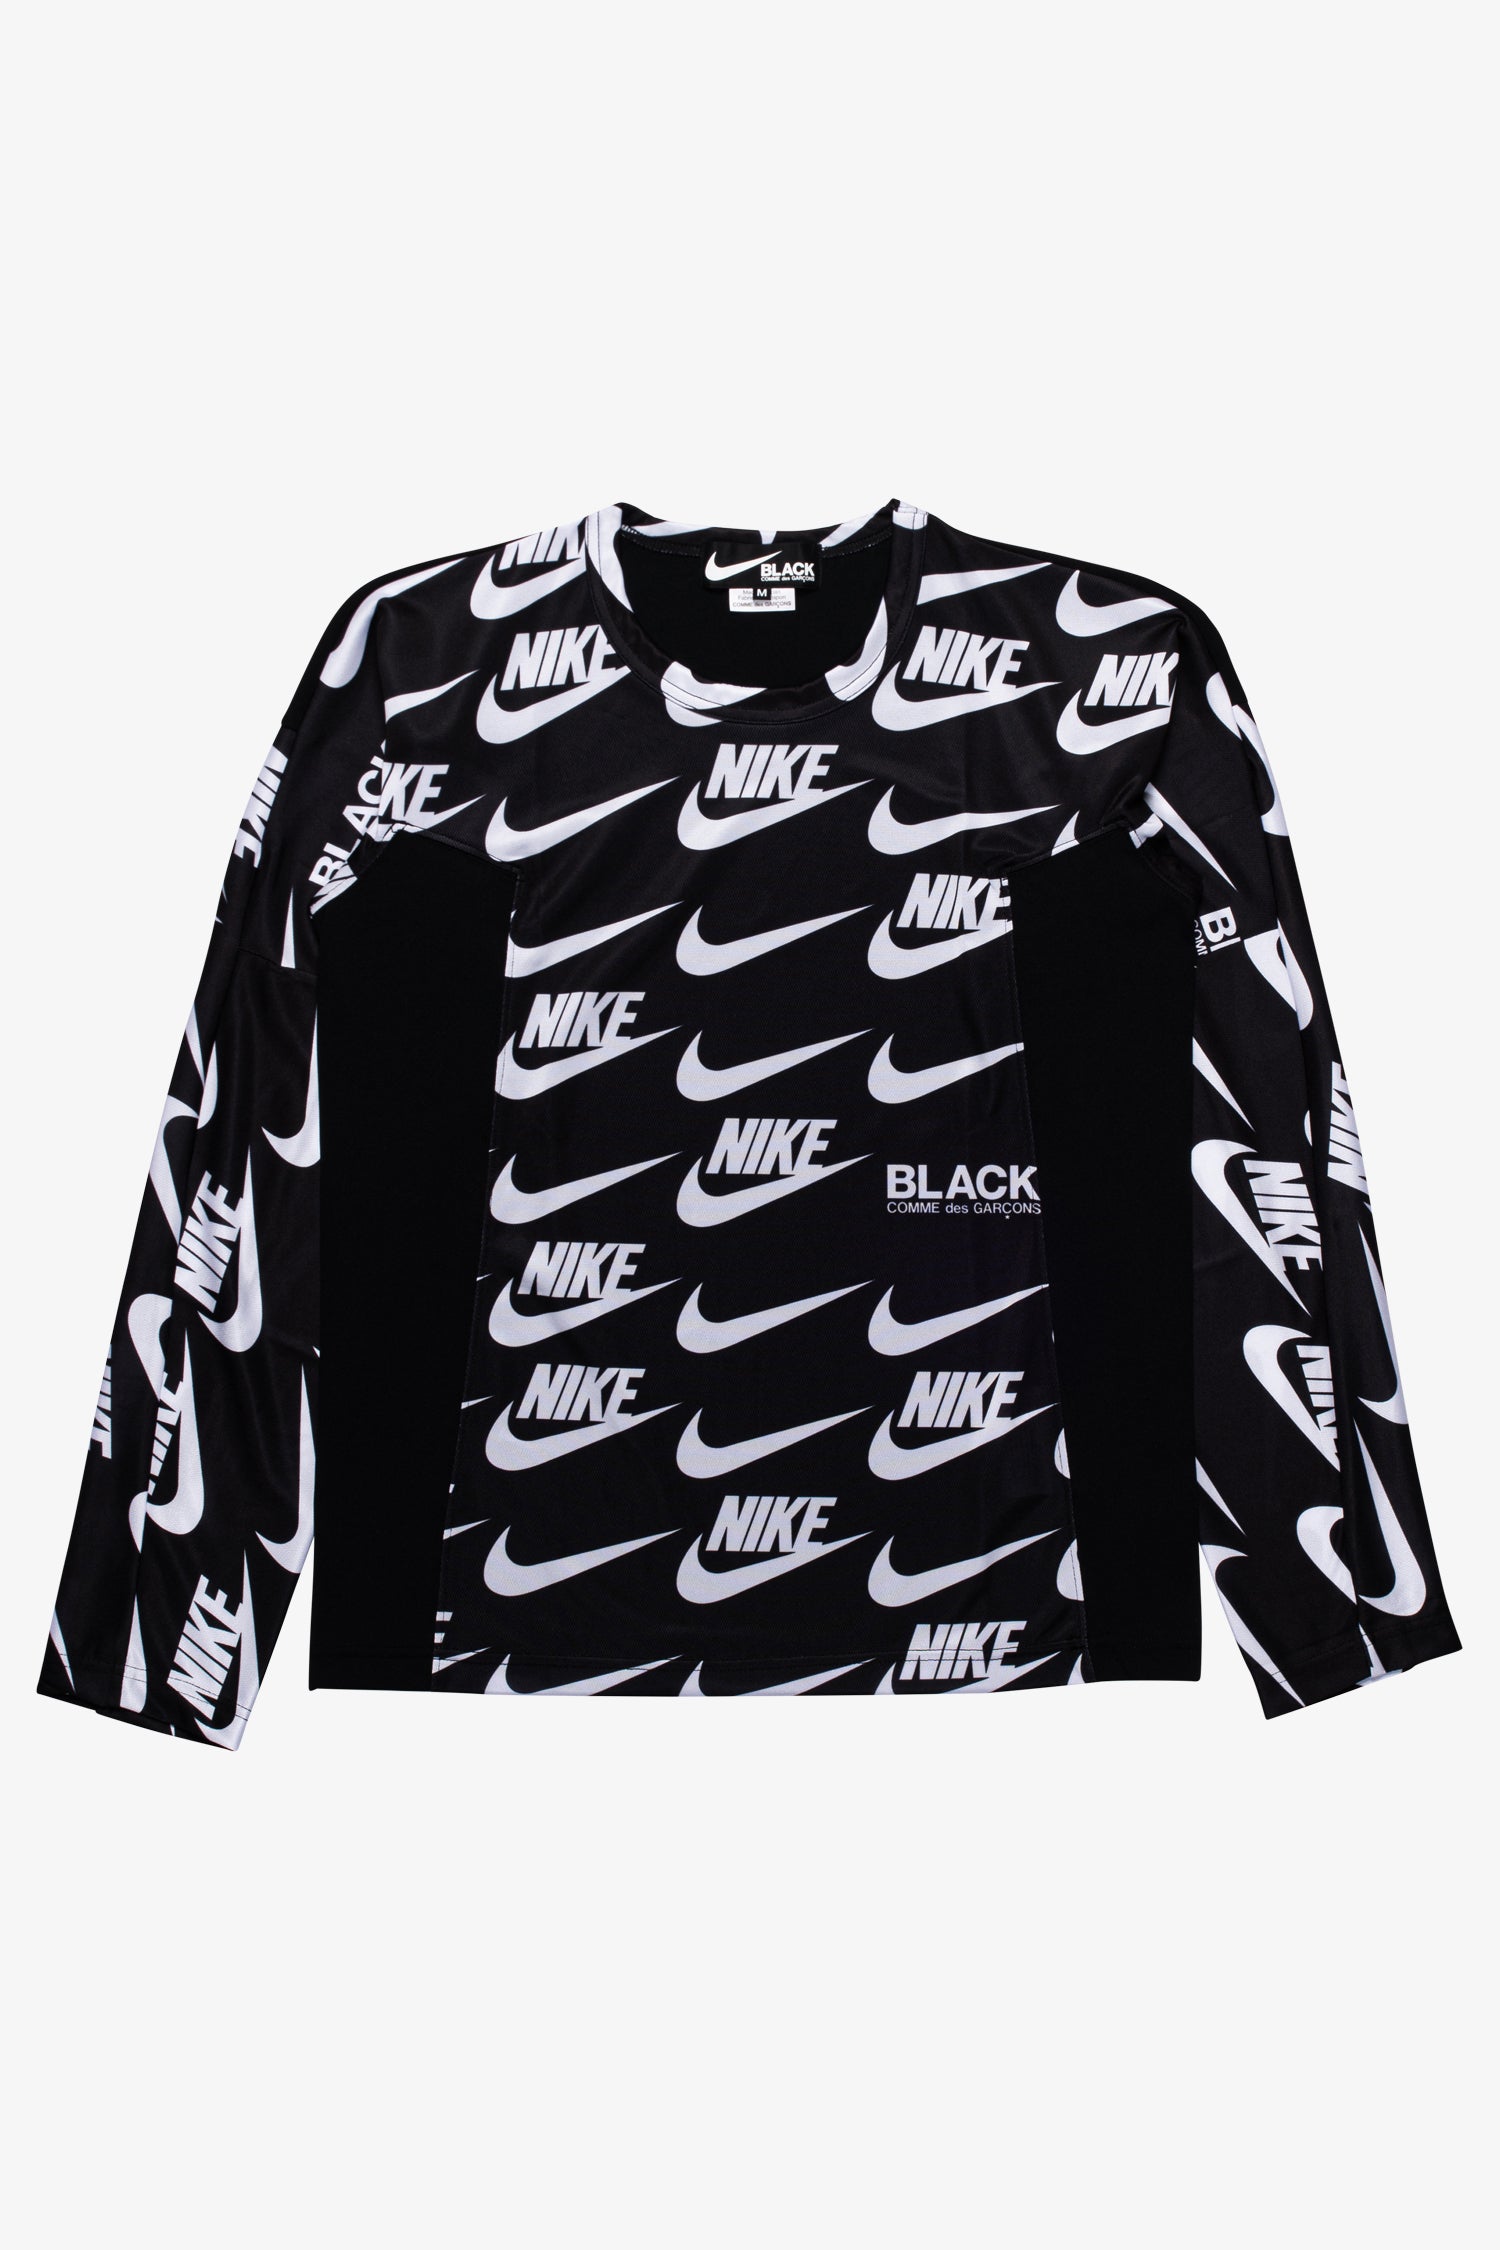 Selectshop FRAME - COMME DES GARCONS BLACK Nike Swoosh Mesh Jersey Longsleeve T-Shirt Dubai